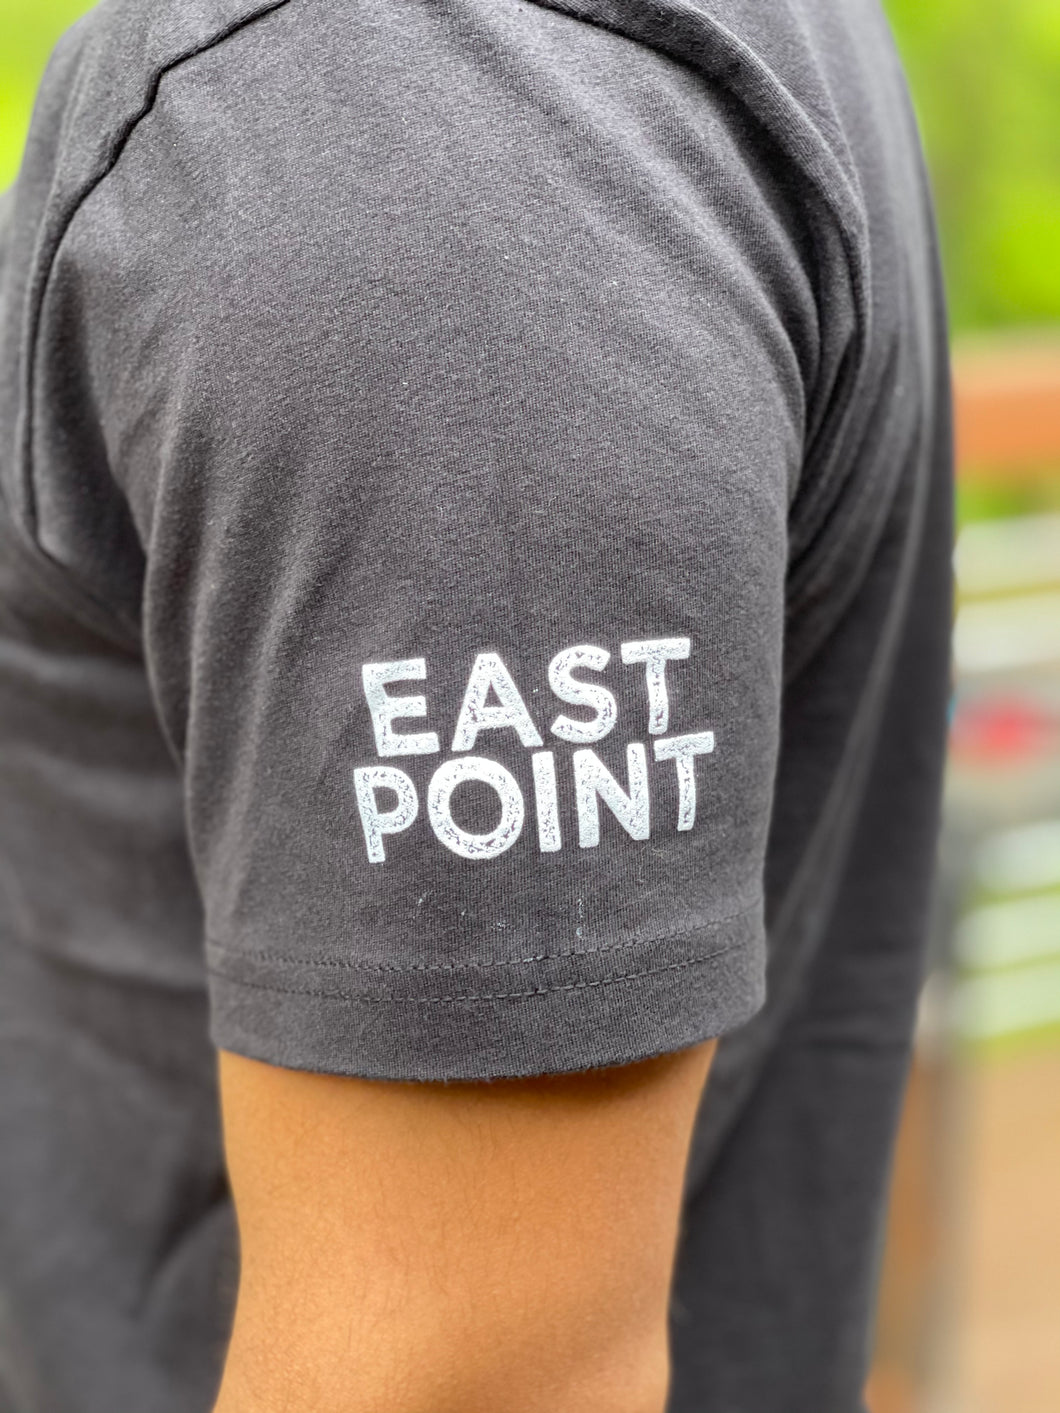 East Point, Humble Beginnings Shirt